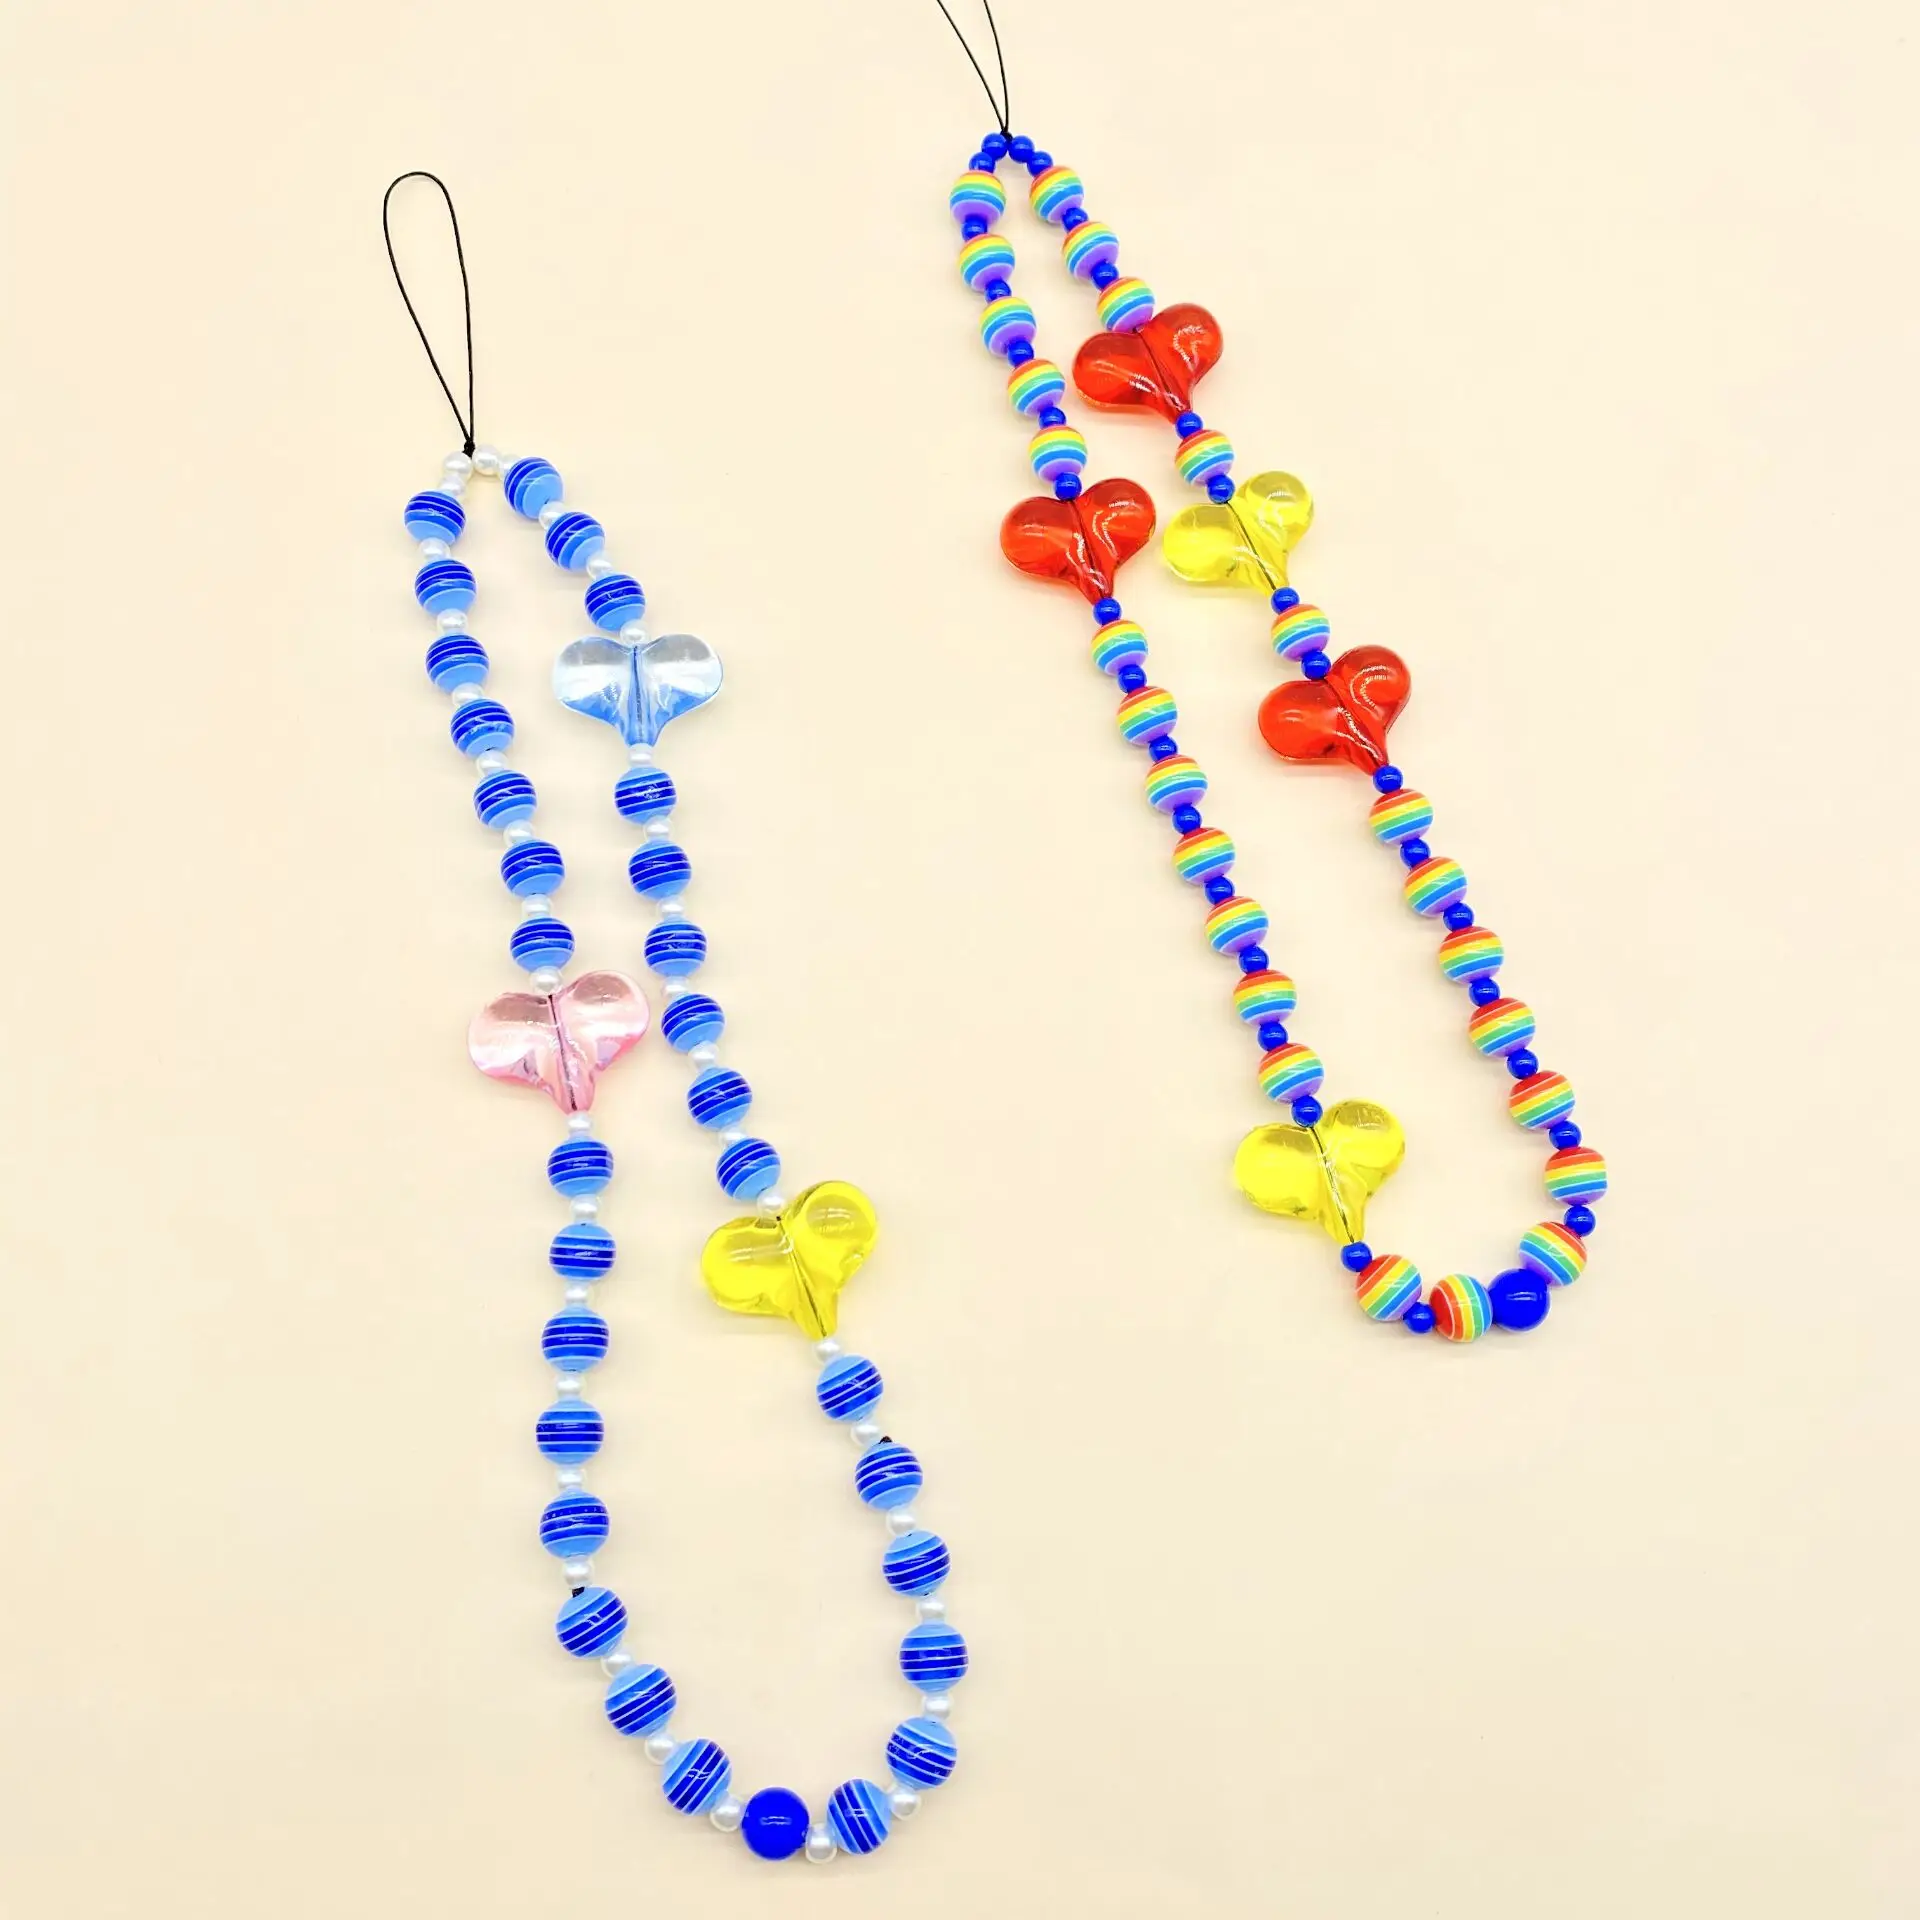 2021 Chic Handmade Colorful Beads Mobile Phone Chain Phone Lanyard Fashion Women Mobile Phone Cord Jewelry